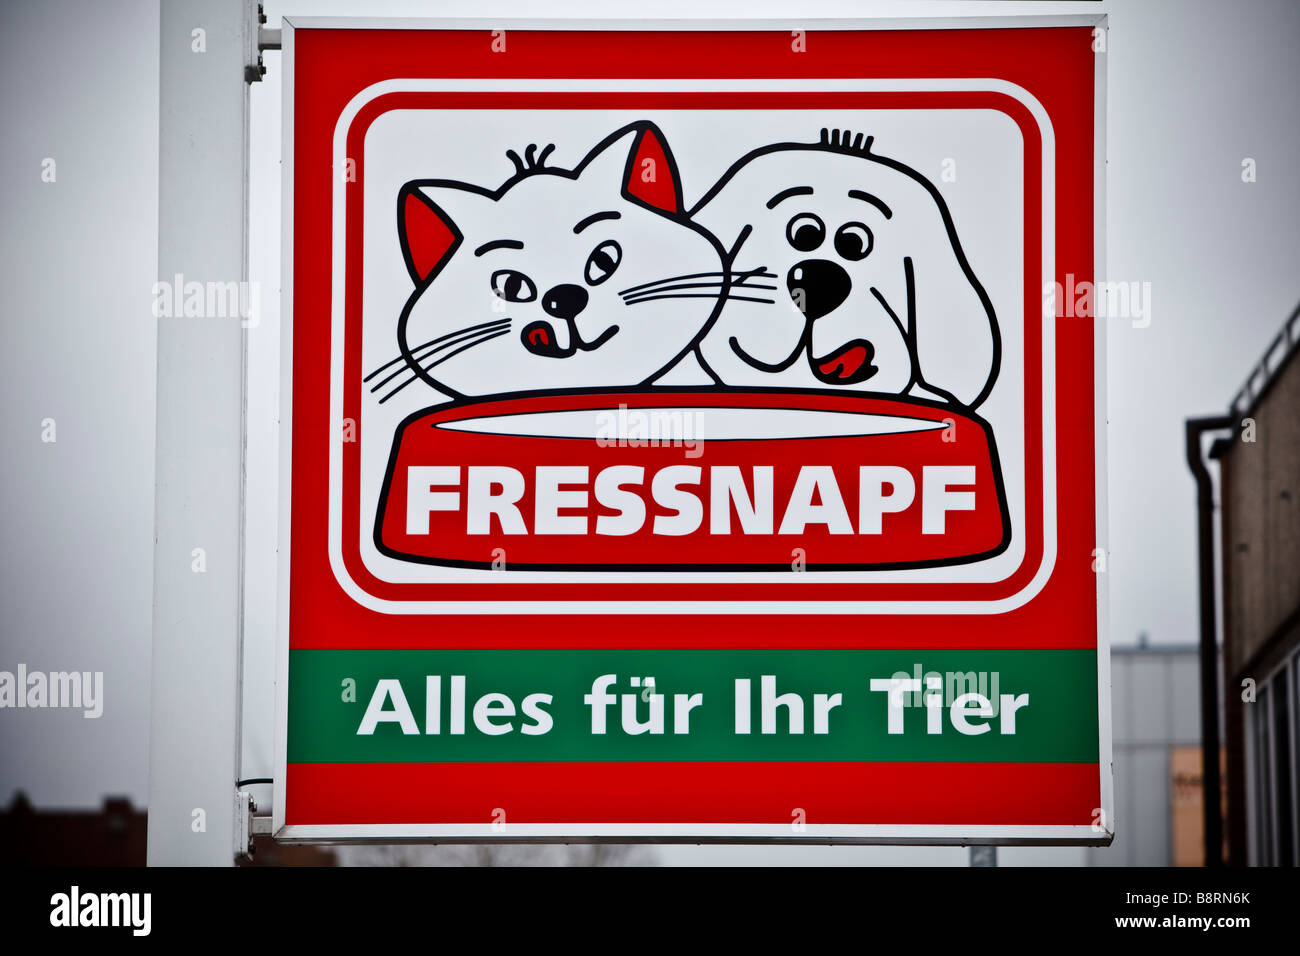 Fressnapf store logo sign Stock Photo